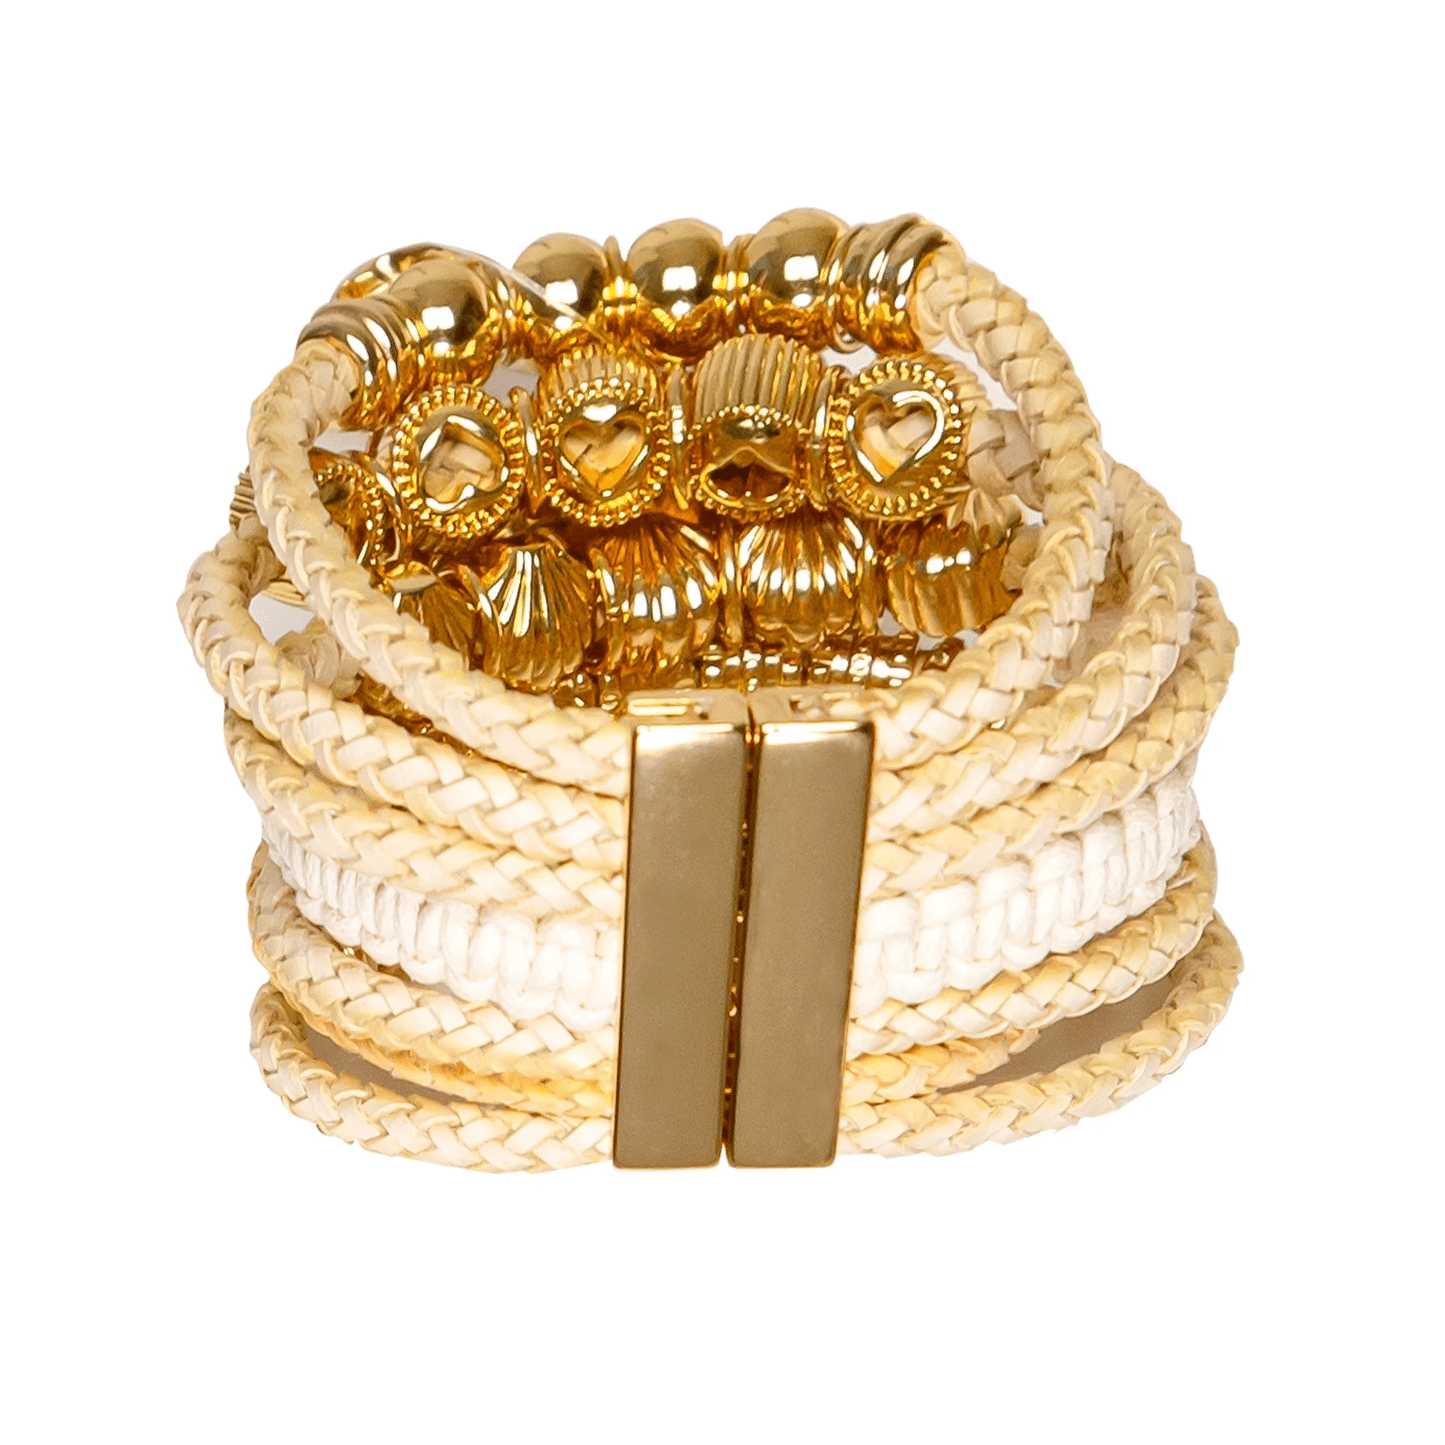 Gold Art Turquiose Shell Bracelet